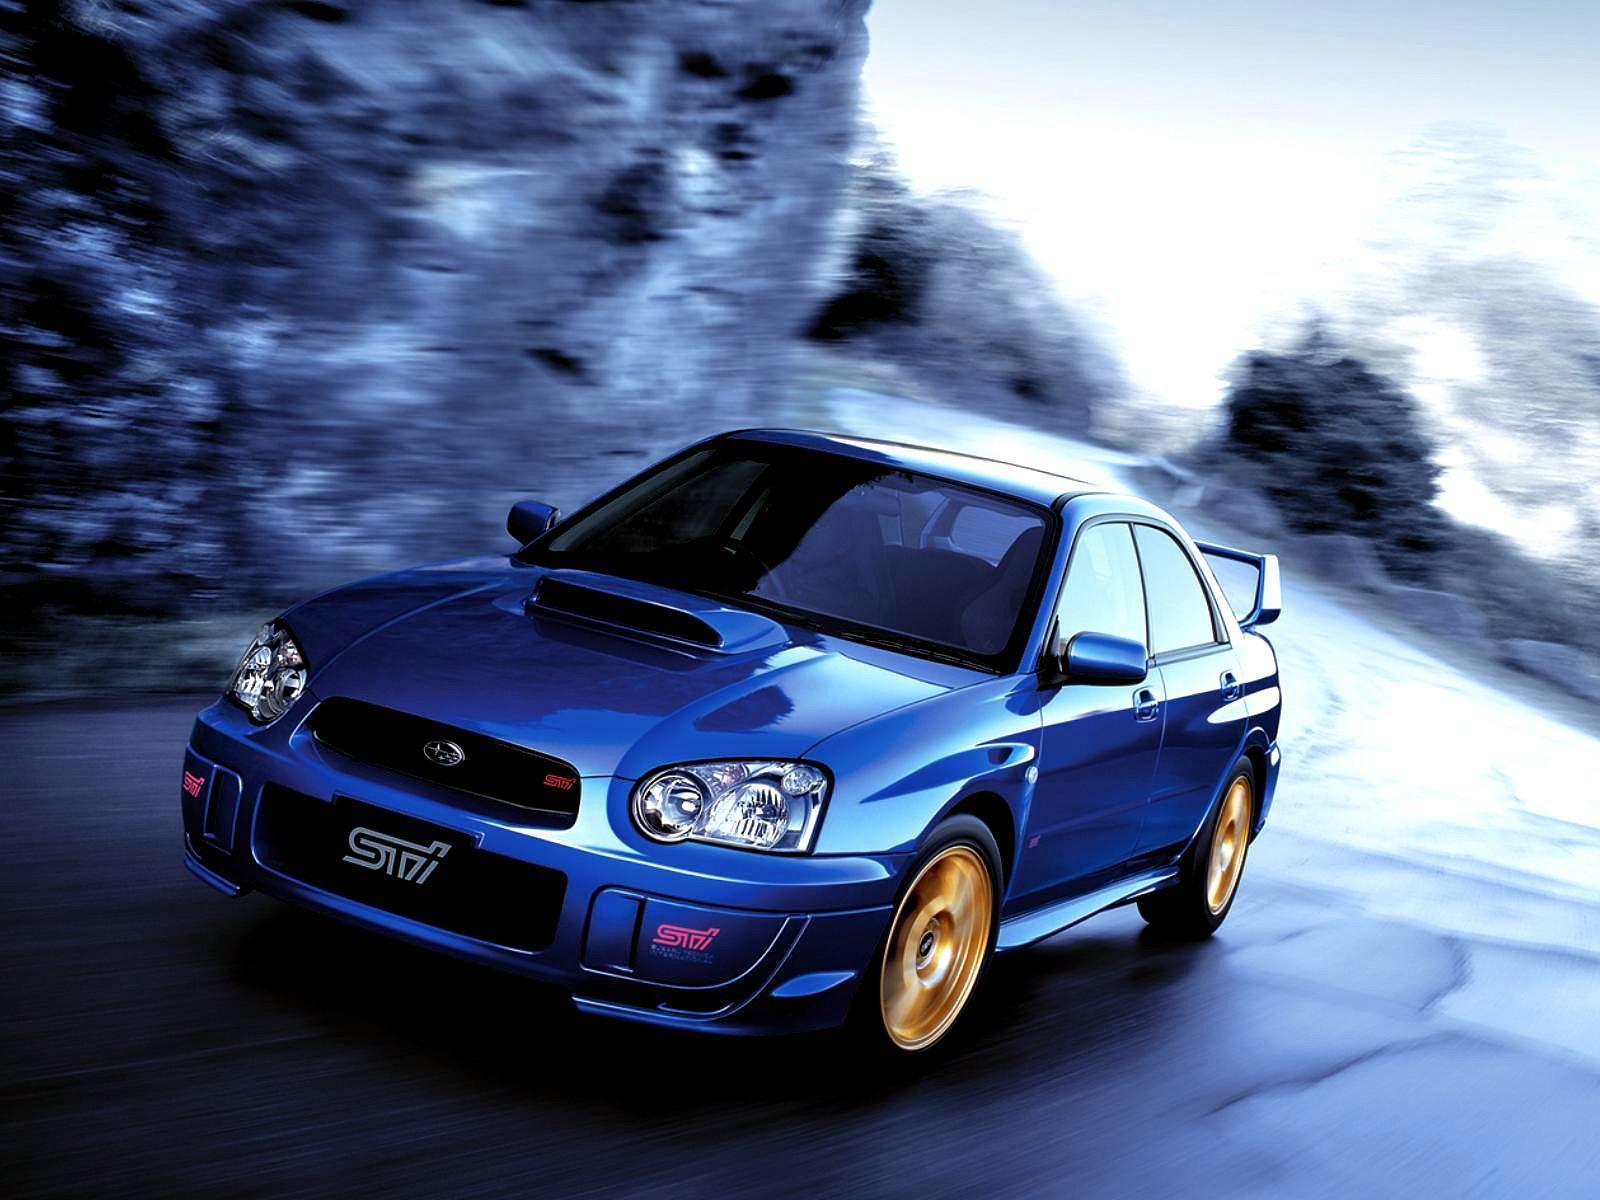 Subaru Impreza WRX HD Wallpaper, Background Image